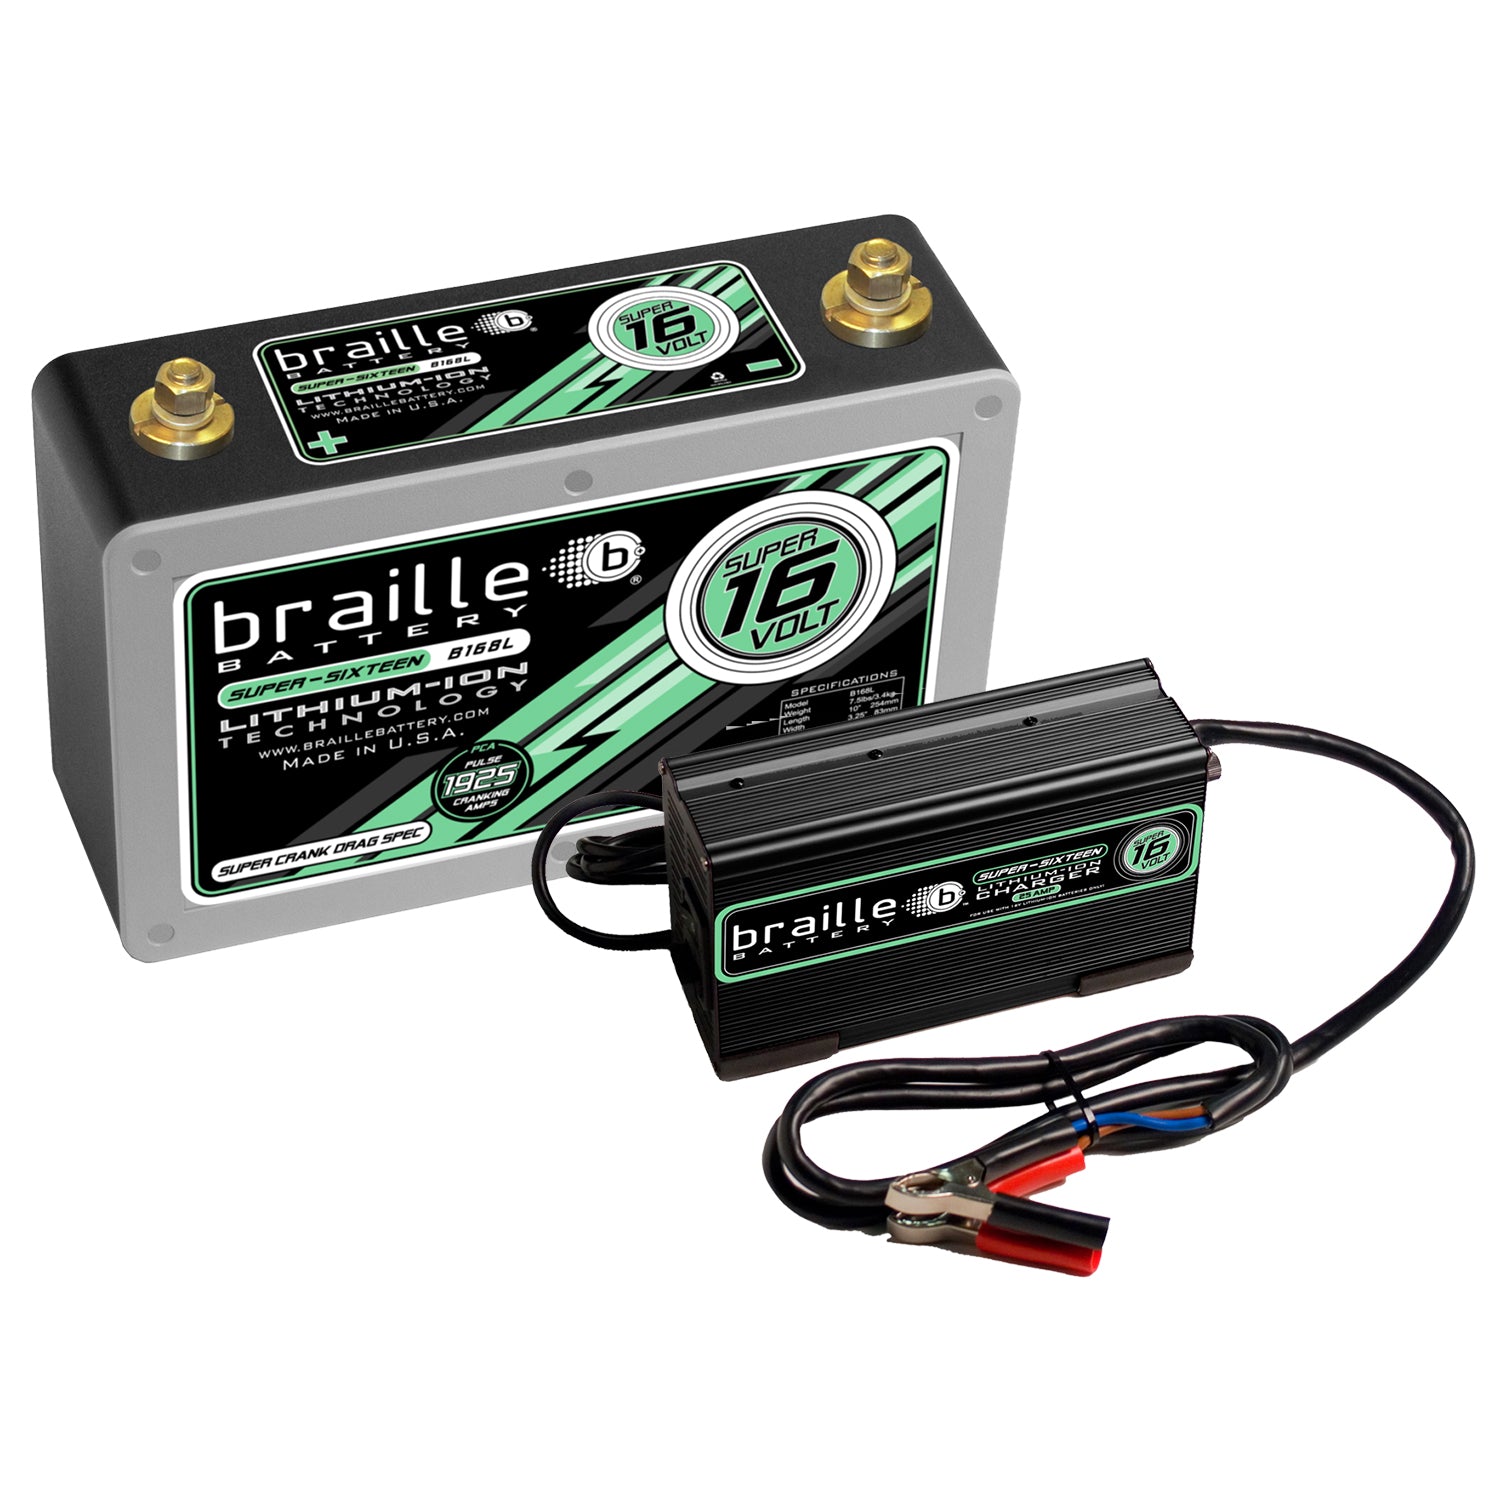 Drag Race 16V Battery & Charger Kit Includes: Super 16 Volt Lithium Battery - 147-B168L